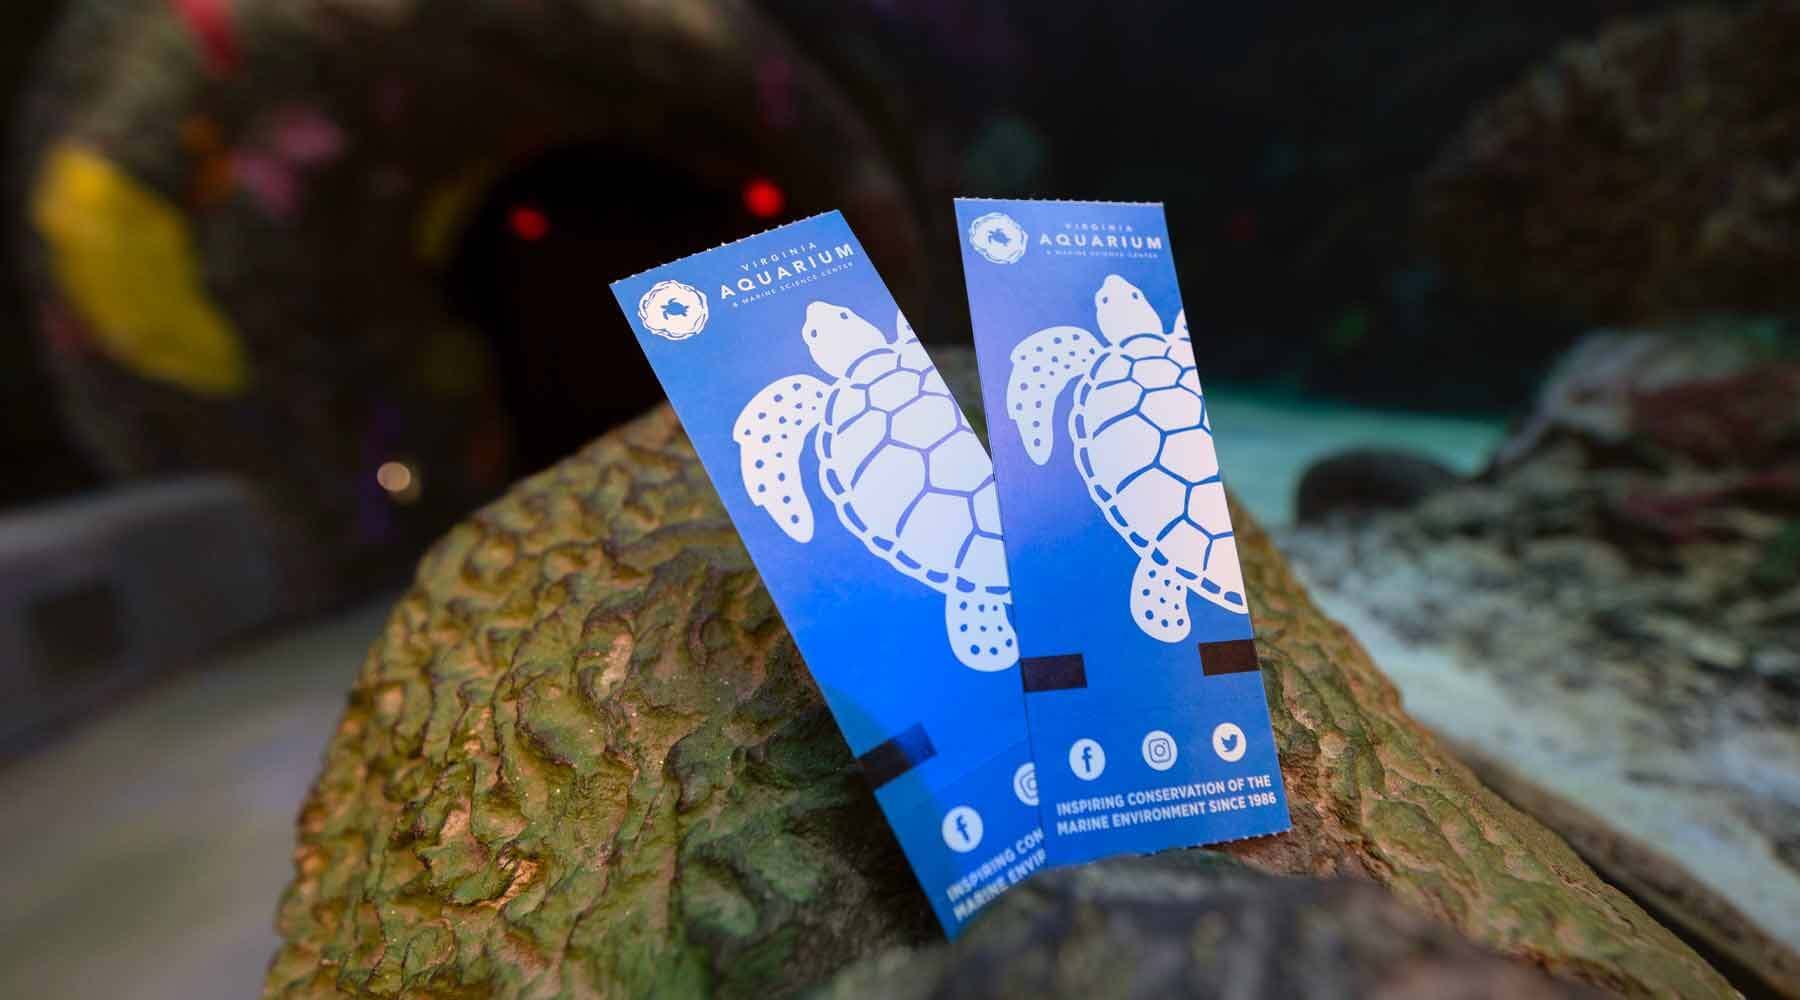 Aquarium Tickets on a Piece of Coral